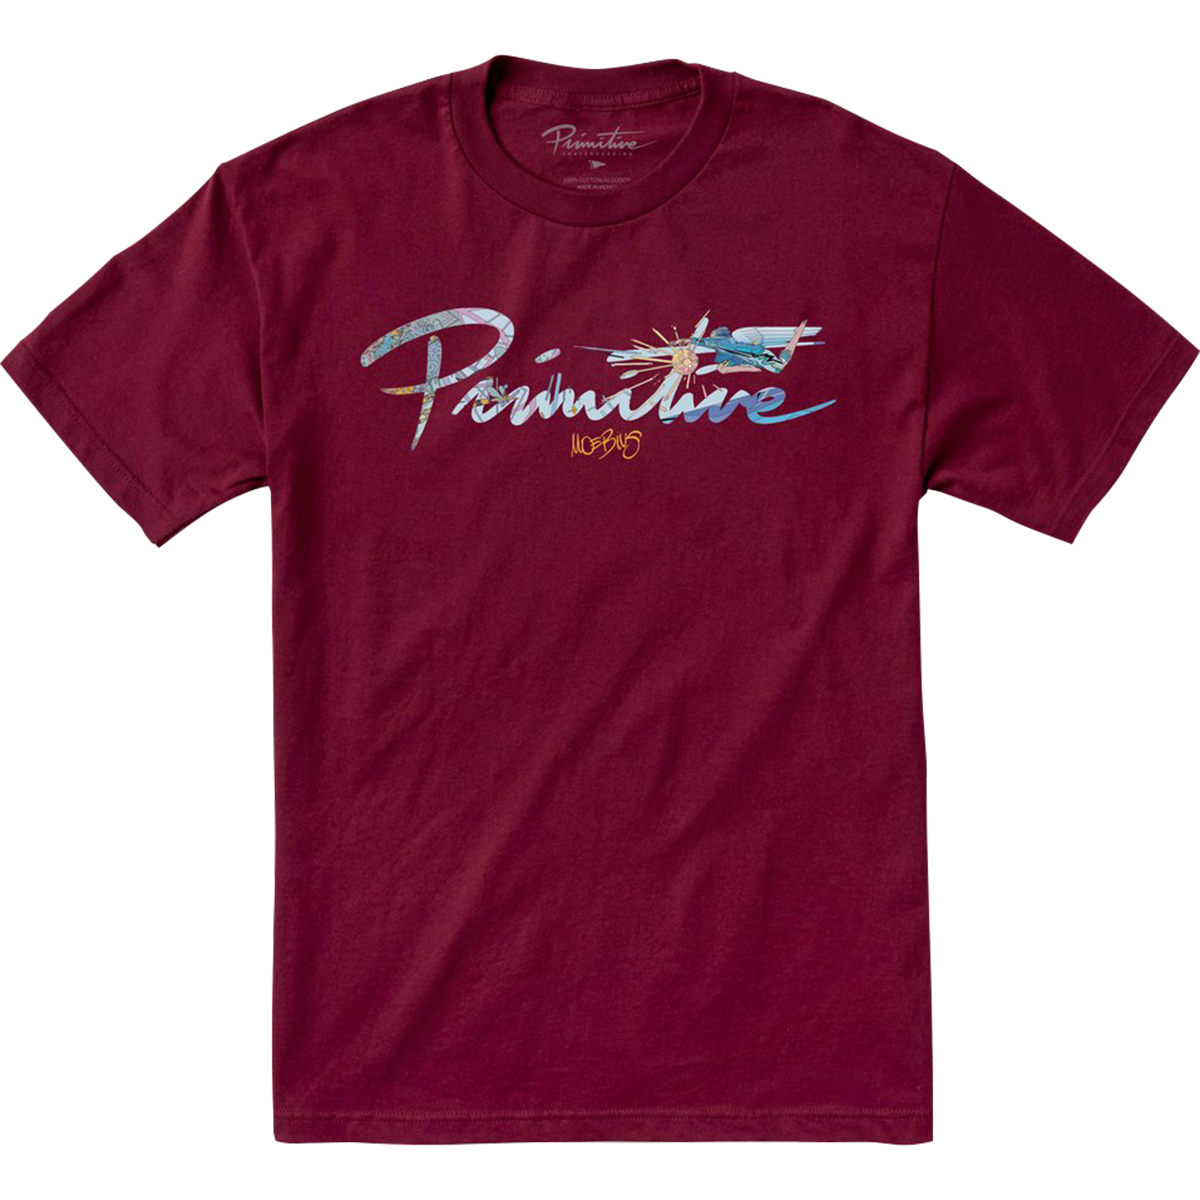 Primitive Moebius Nuevo T-Shirt - Size: SMALL Burgundy